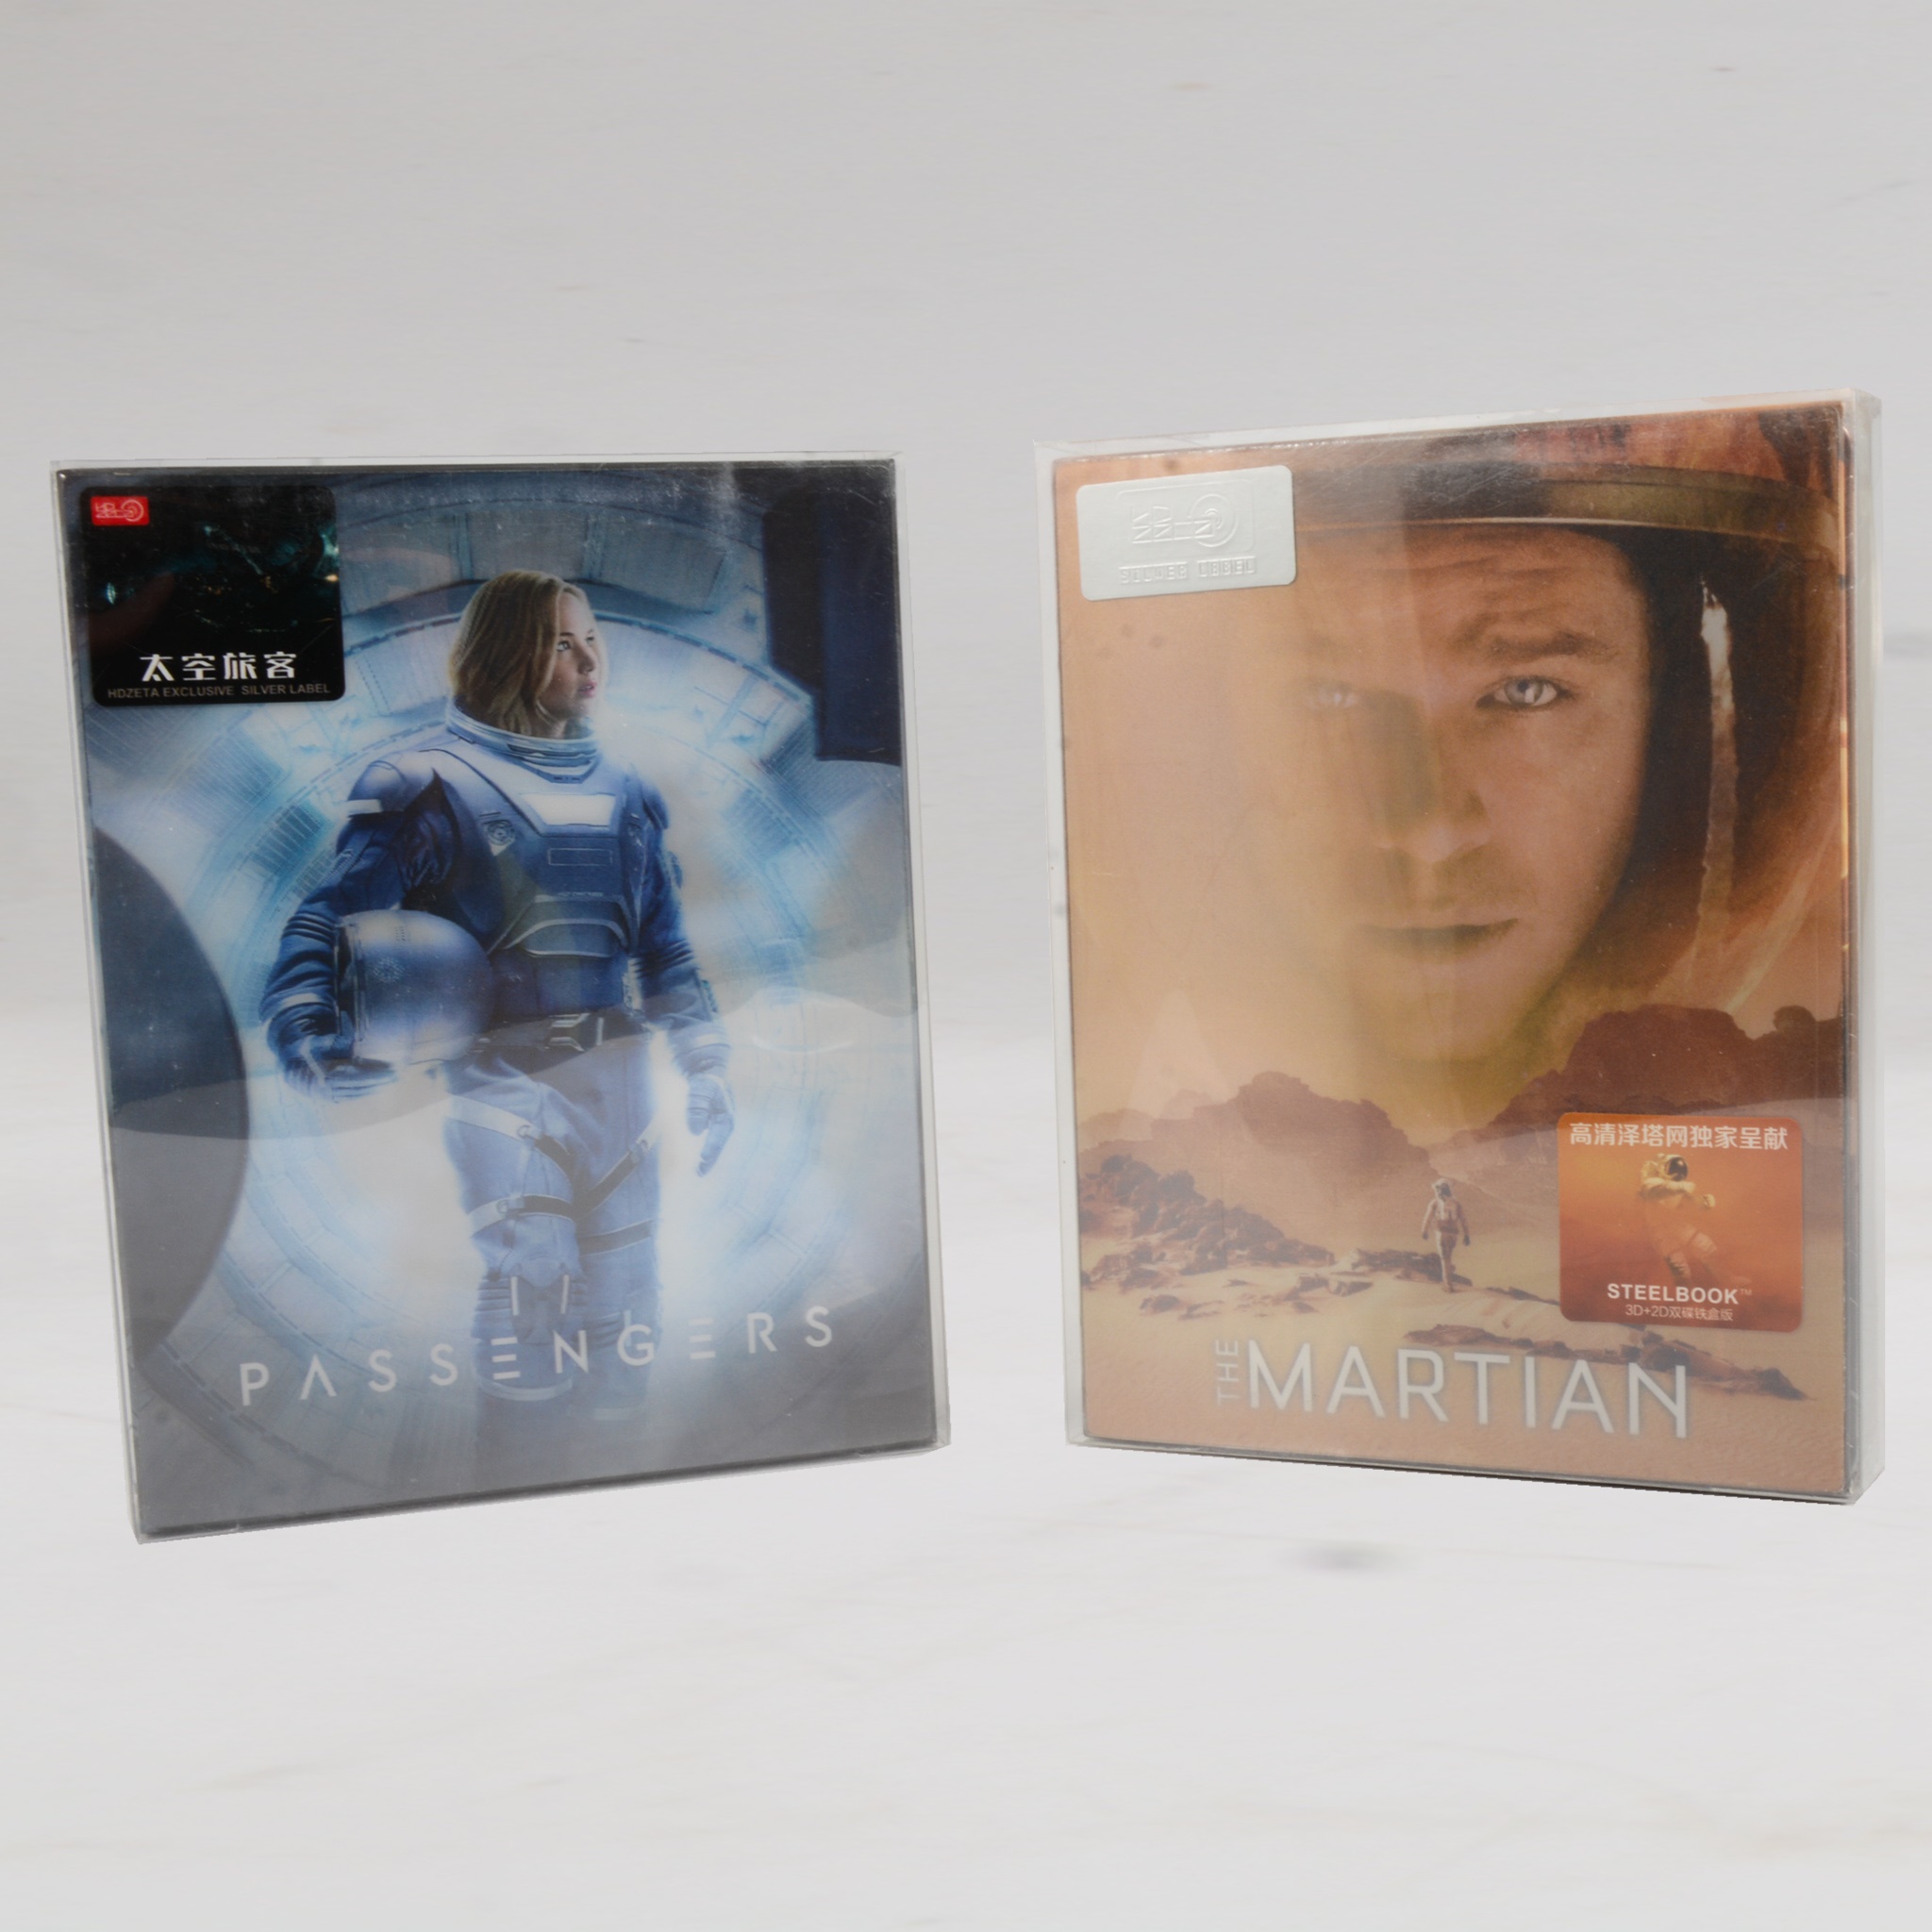 Passengers and The Martian Hdzeta Steelbook Silver Label Lenticular 3D Blu-rays.